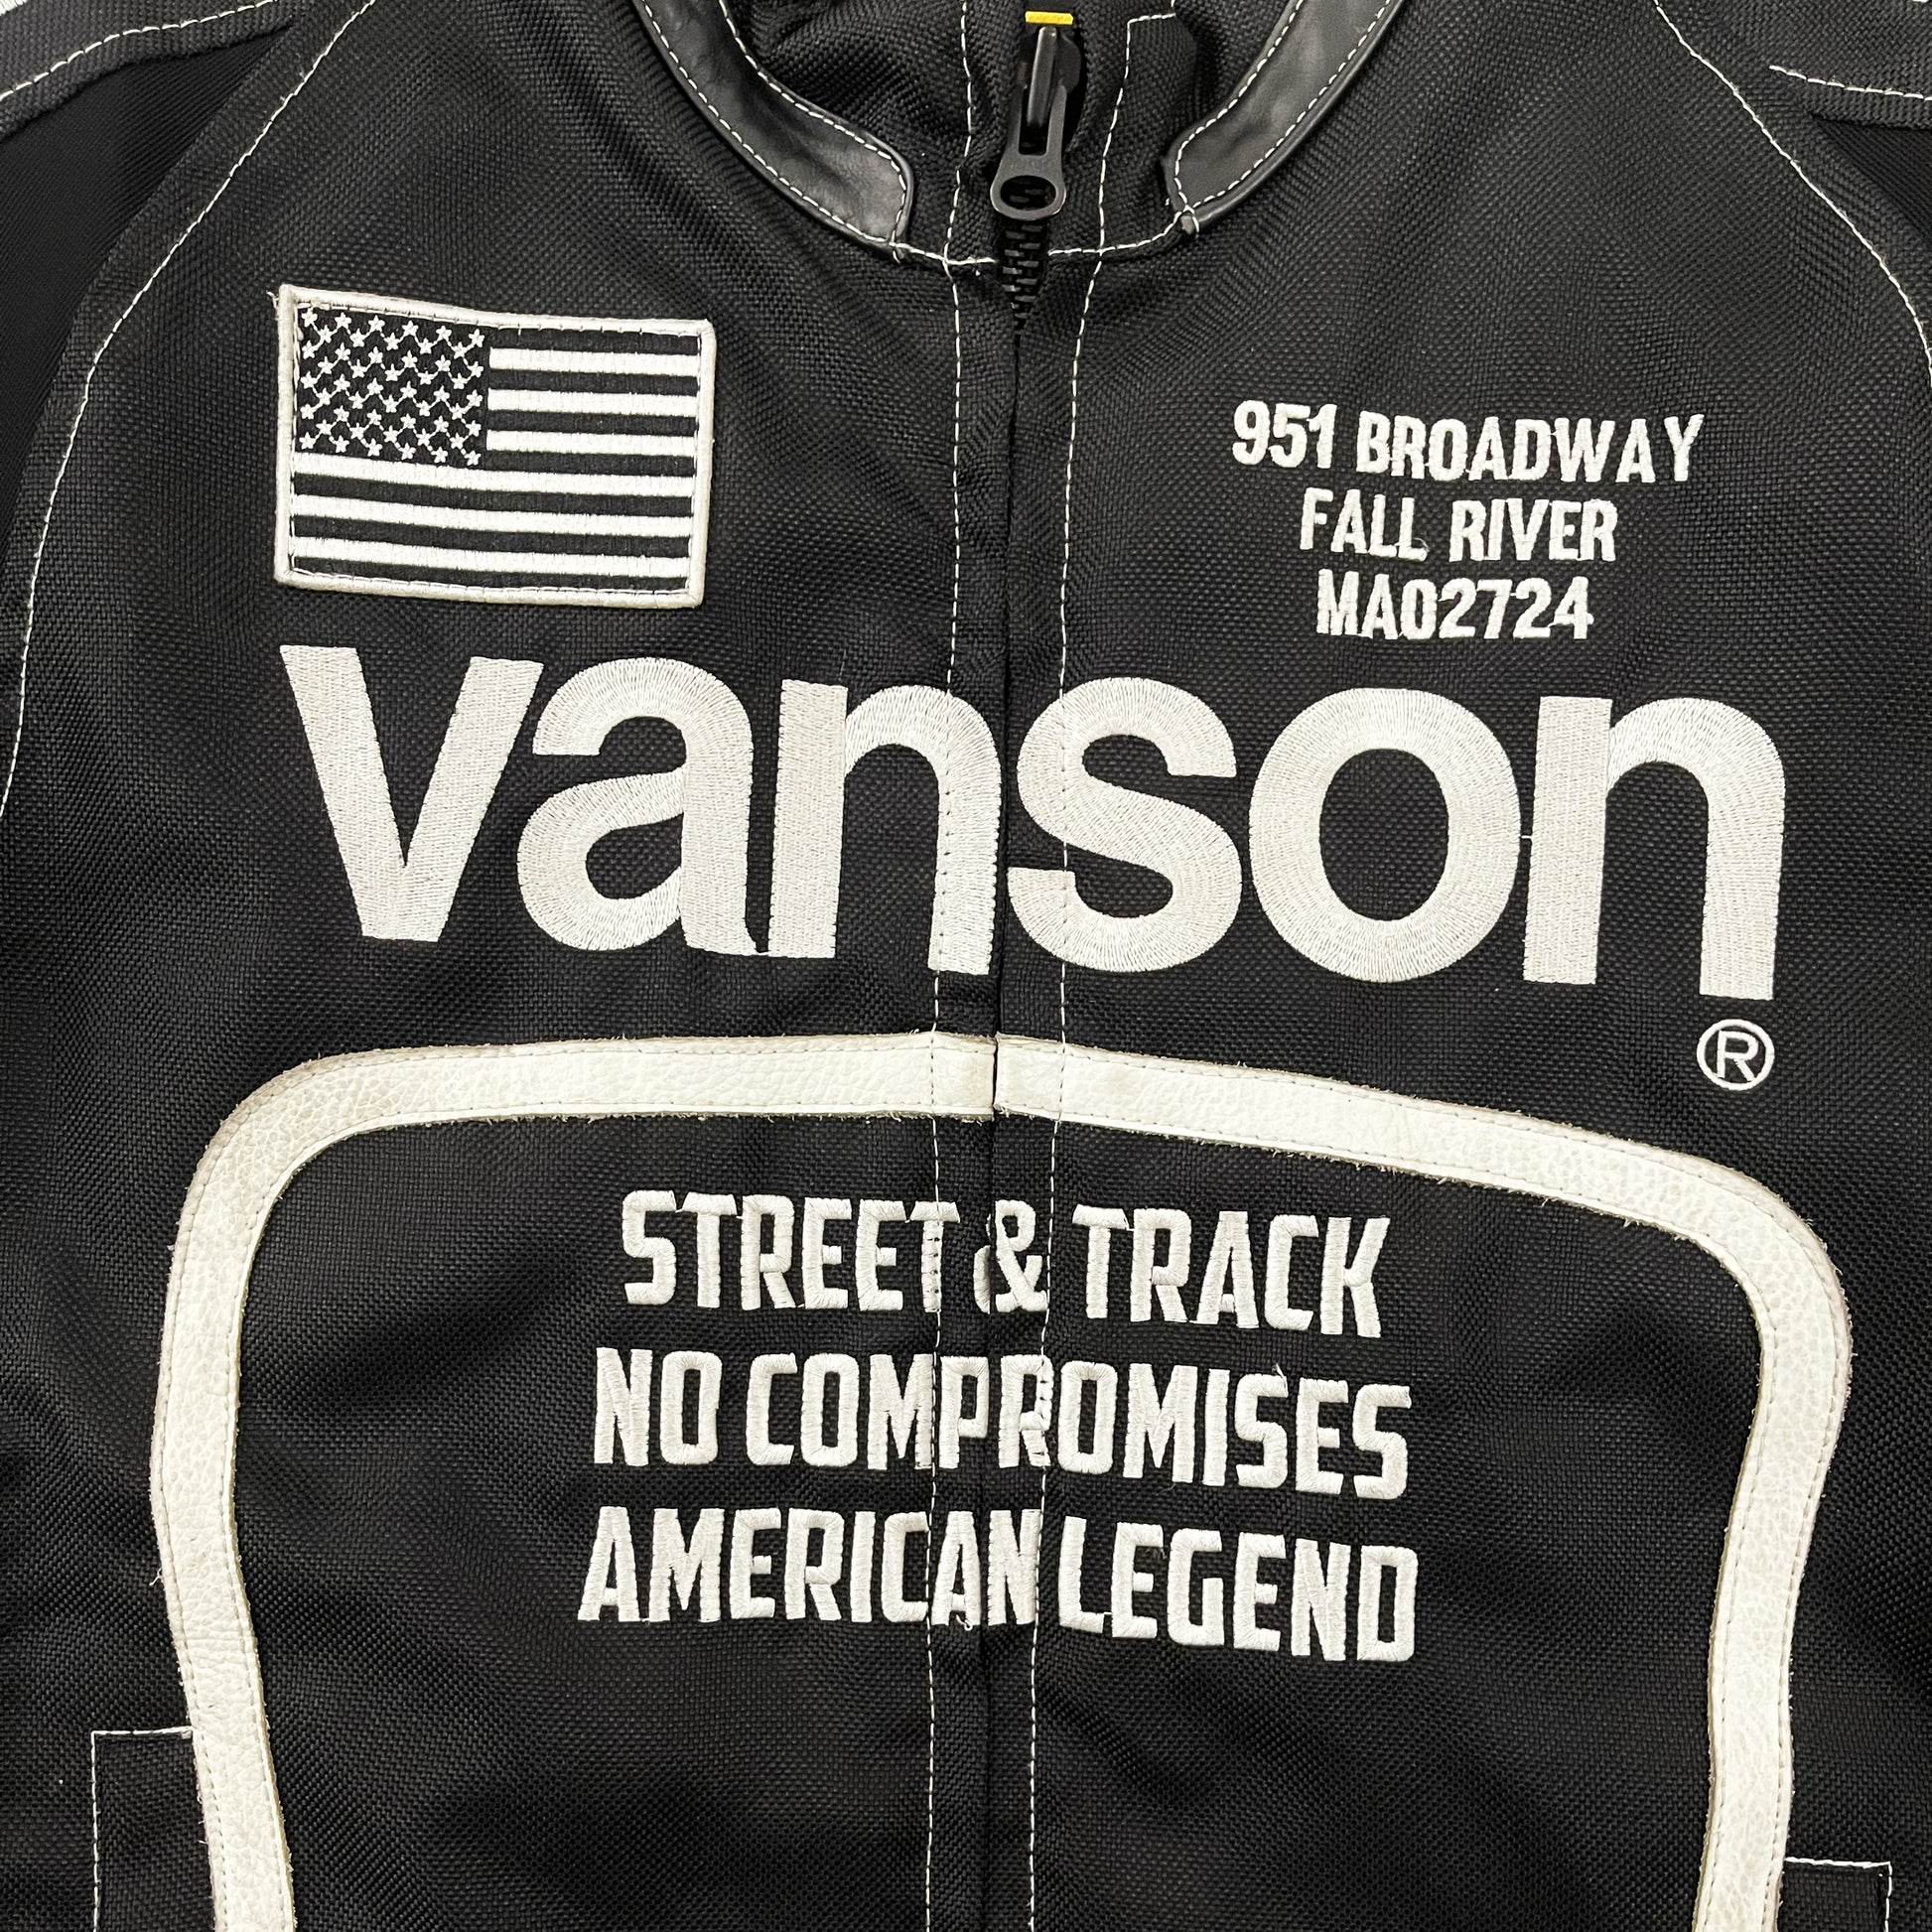 Vanson Leathers Motorcycle Mesh Racer Jacket